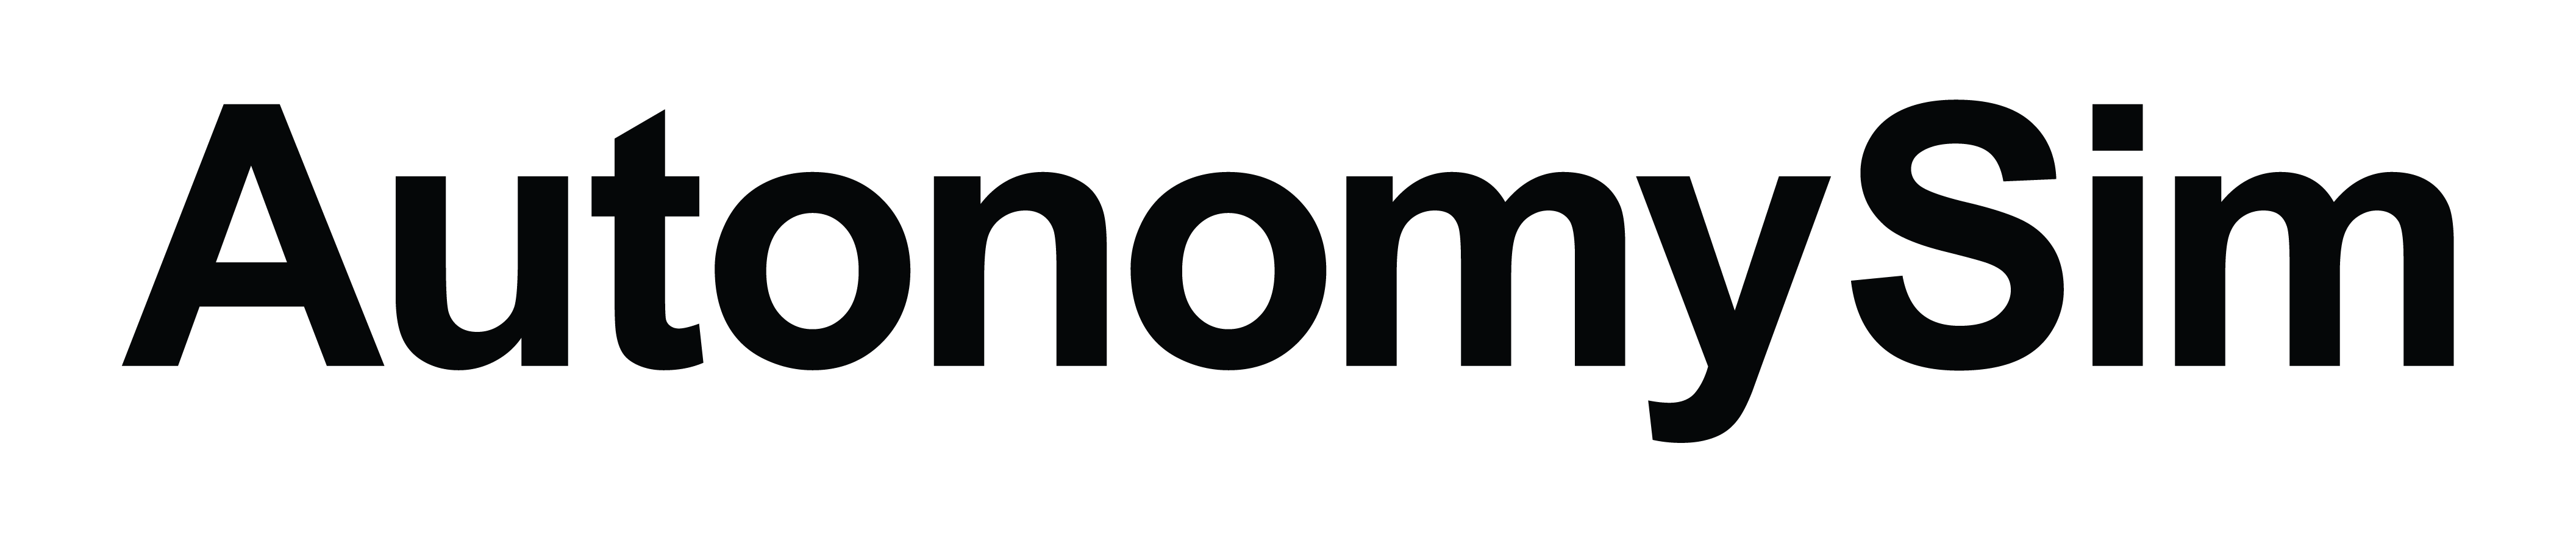 AutonomySim logo